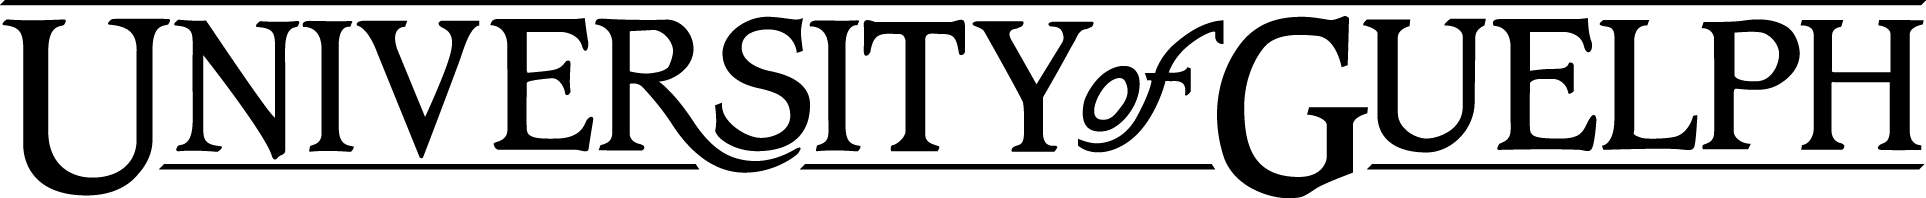 University of Guelph horizantal Identifier logotype